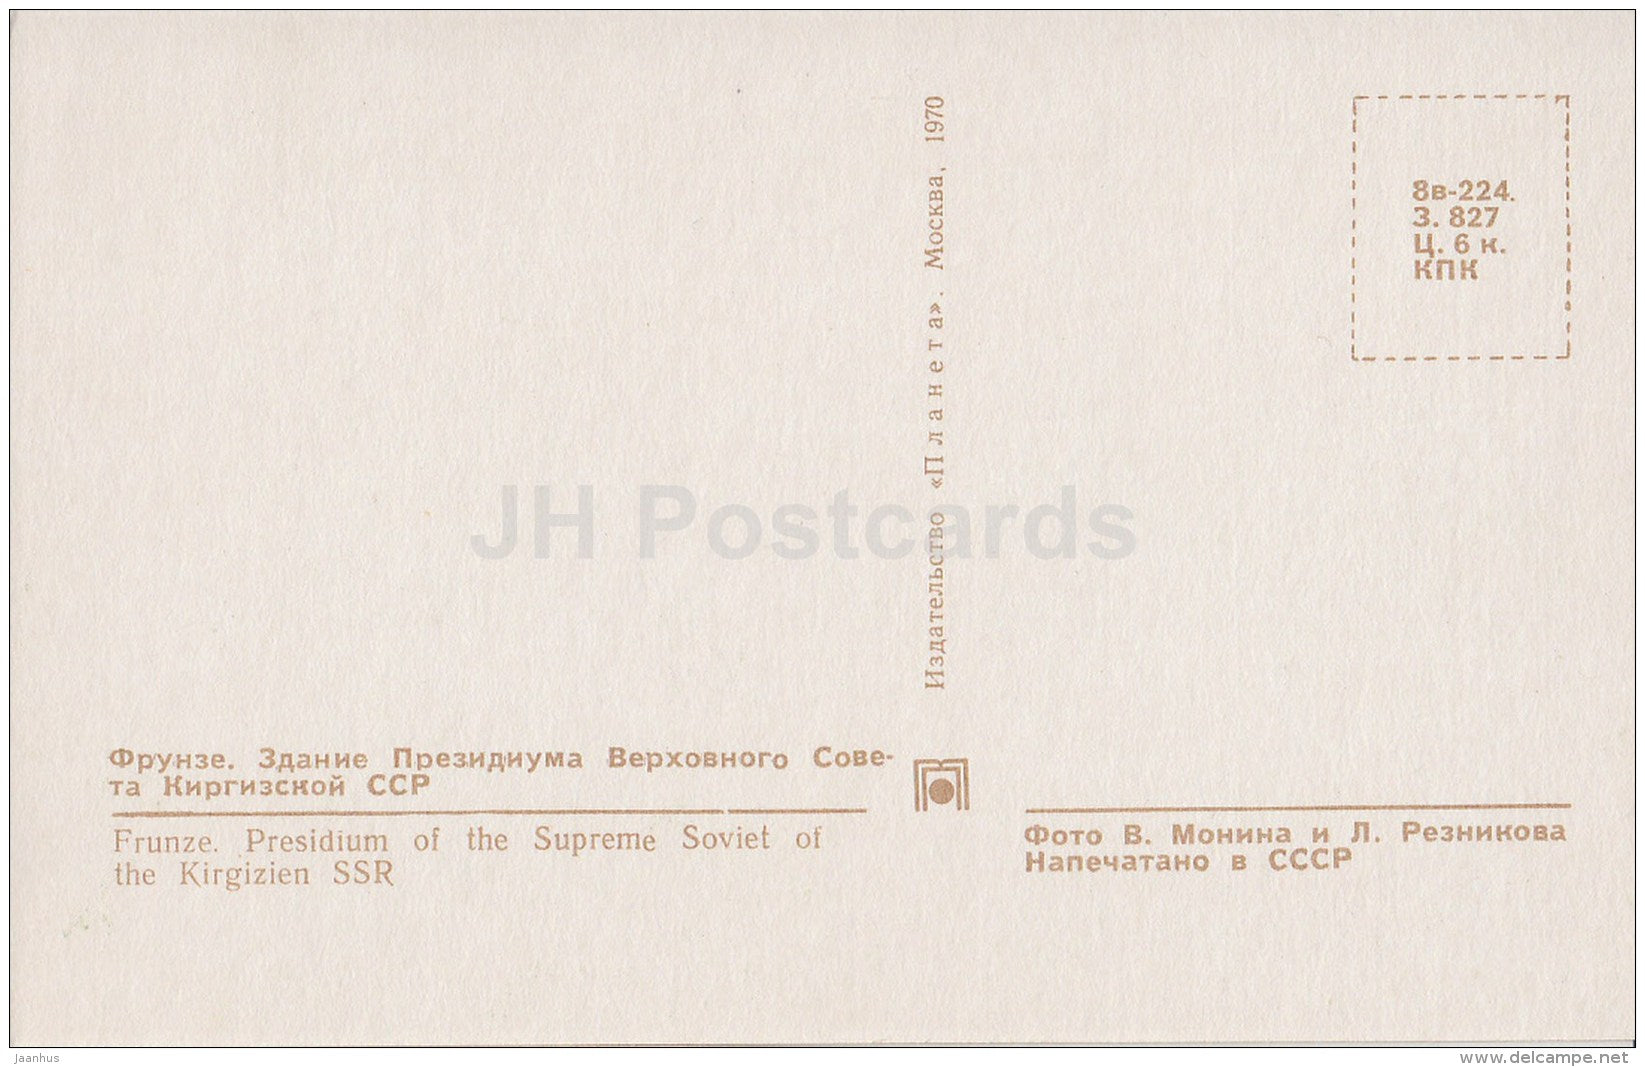 Presidium of the Supreme Soviet of Kyrgyz SSR - Bishkek - Frunze - 1970 - Kyrgystan USSR - unused - JH Postcards